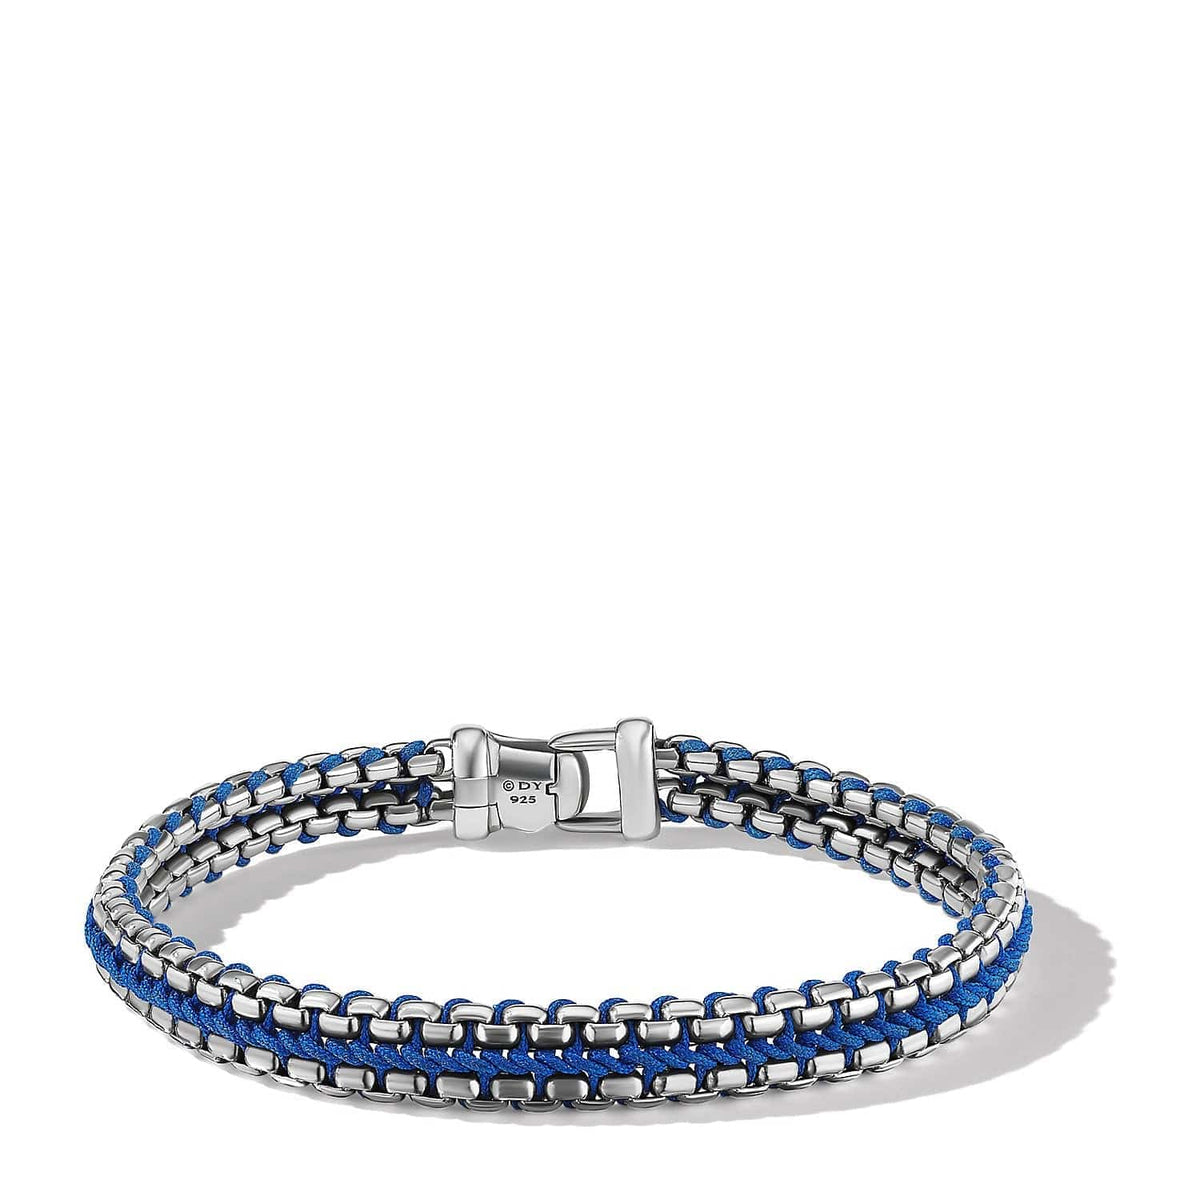 Woven Box Chain Bracelet in Blue, Sterling Silver, Long's Jewelers